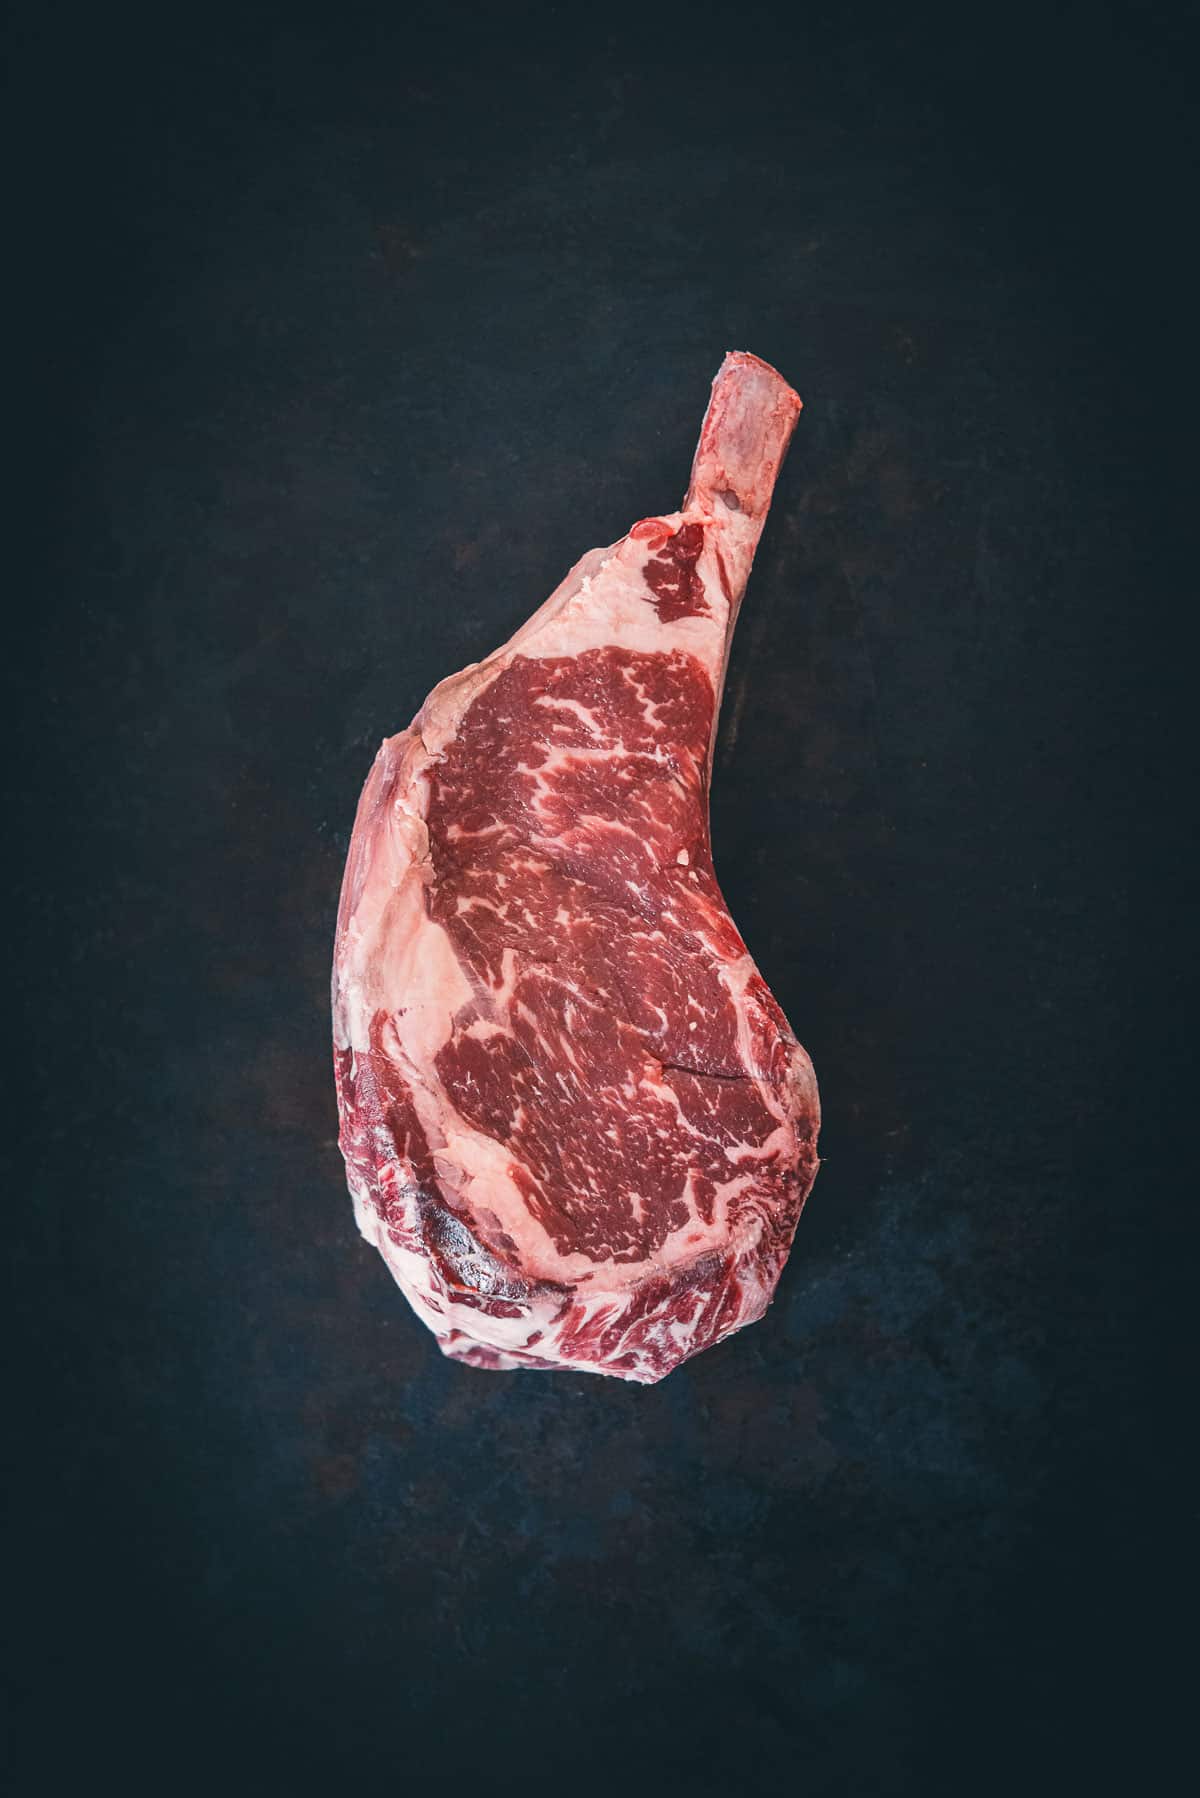 Raw cowboy ribeye steak to show short french bone protruding and marbling. 